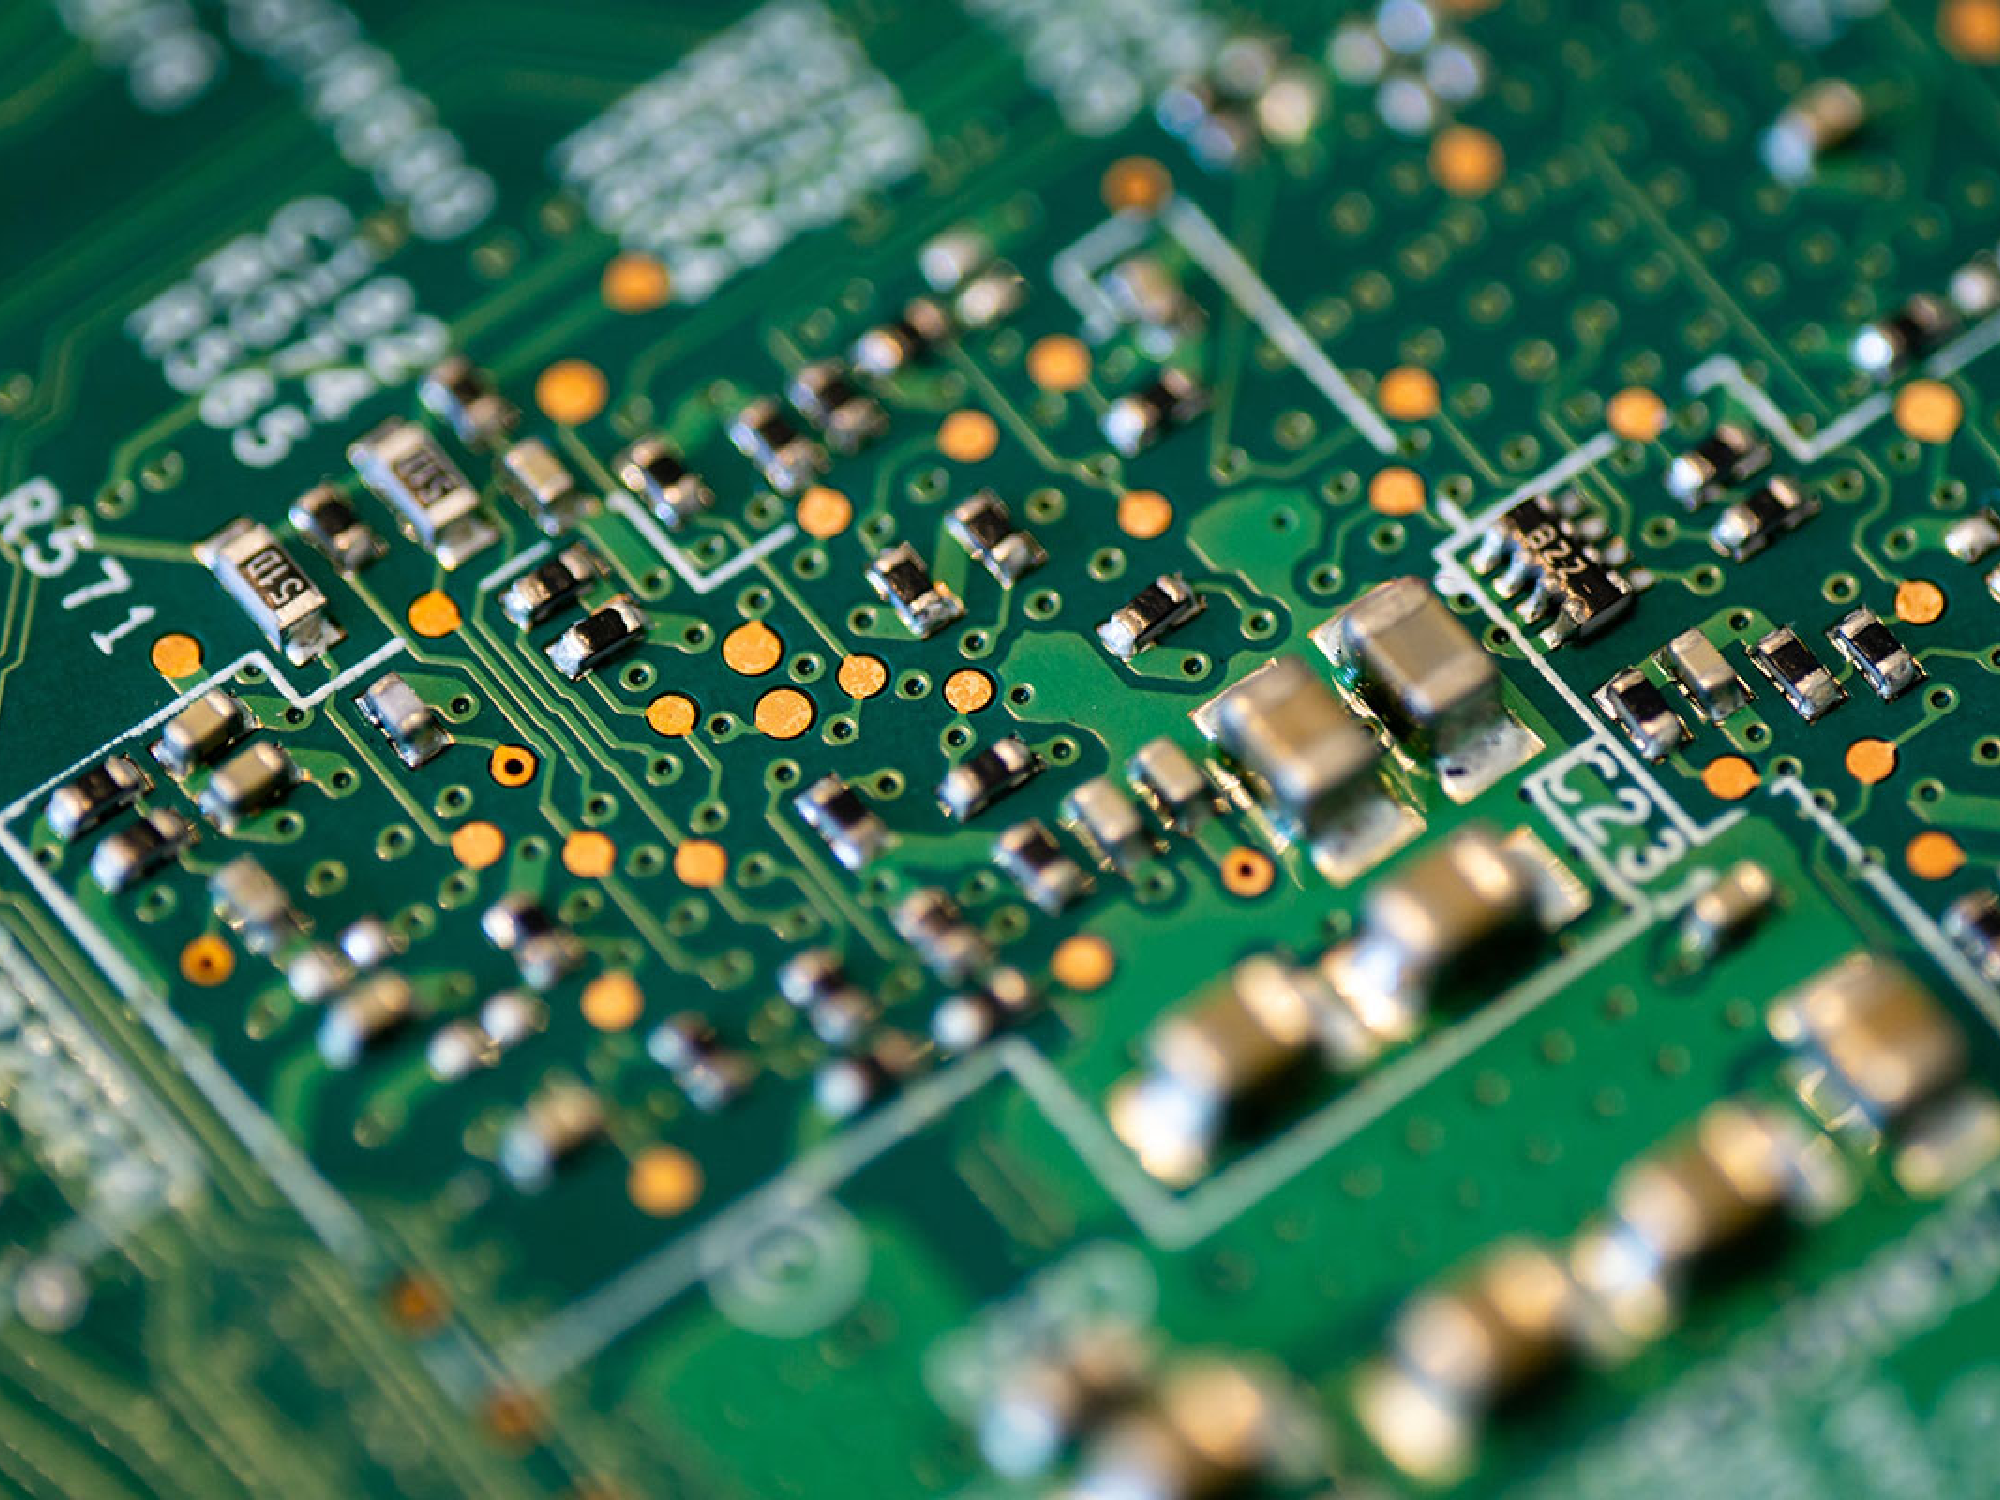 A close-up shot of a circuit board